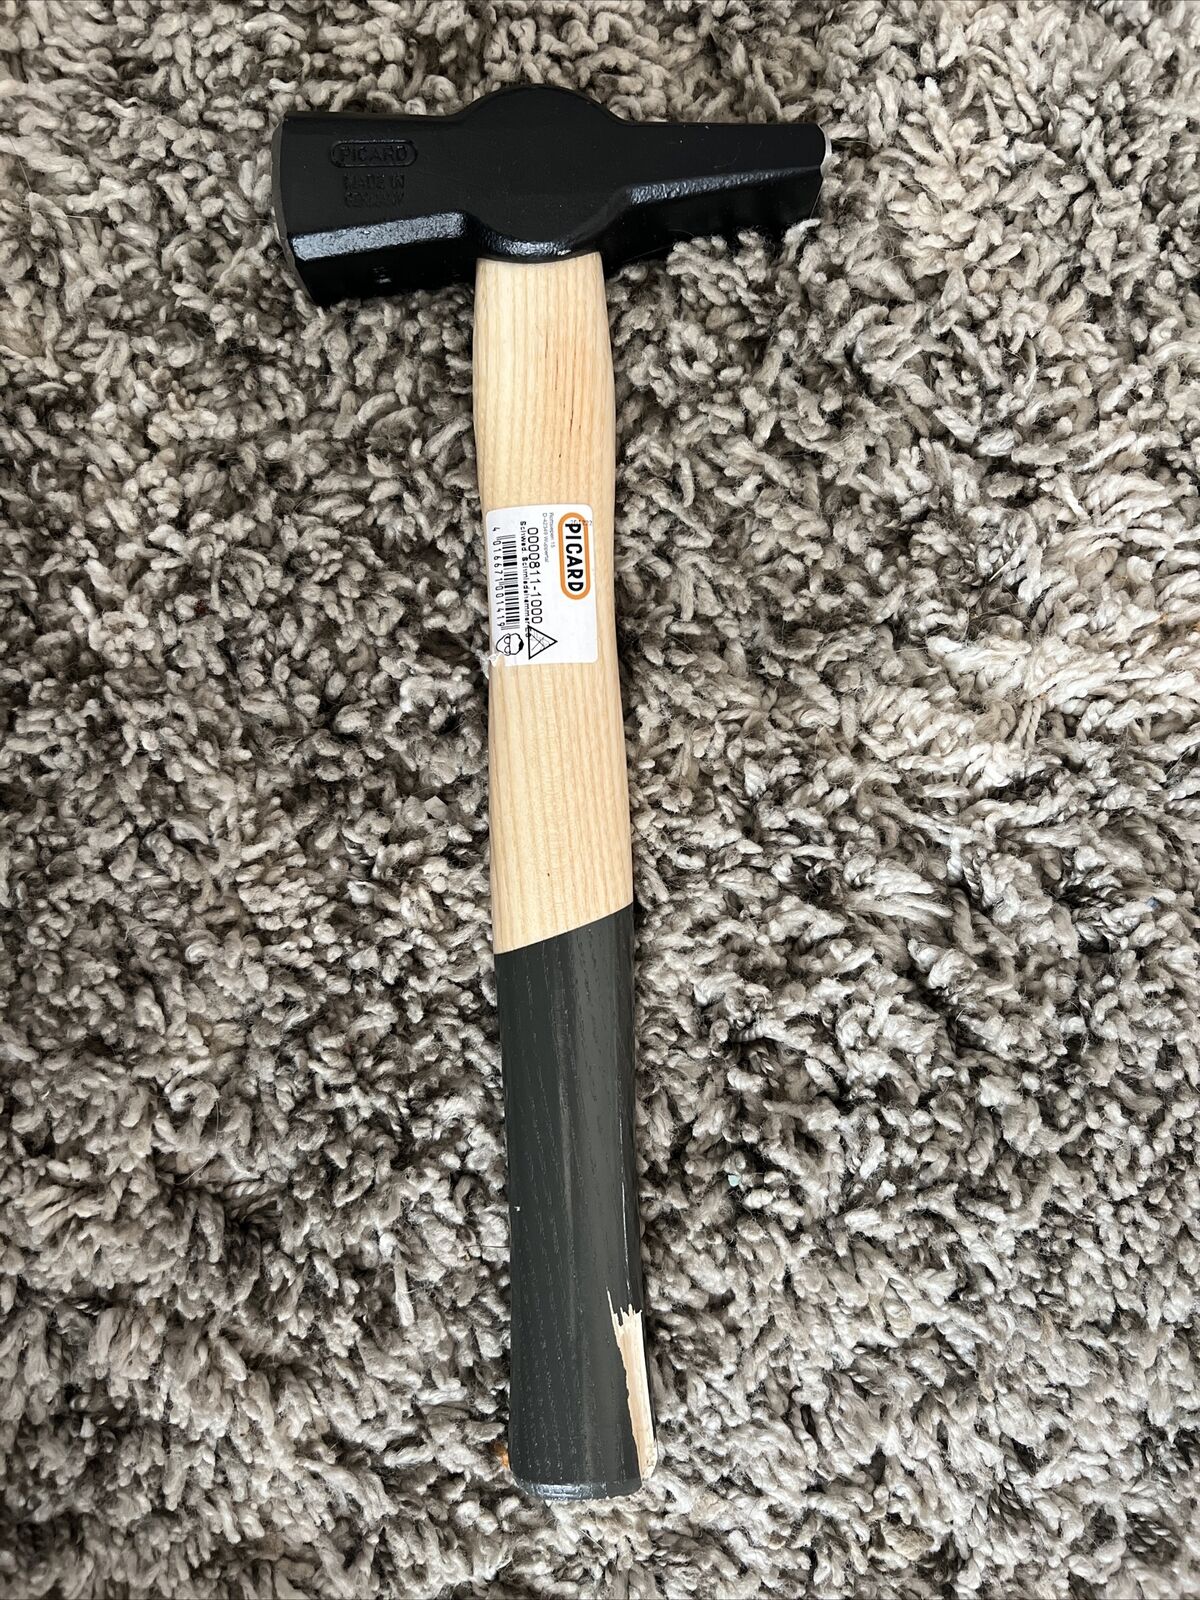 Picard Blacksmith Hammer, 2.2lb. 1000g Swedish Design (Small Wood Chipped)